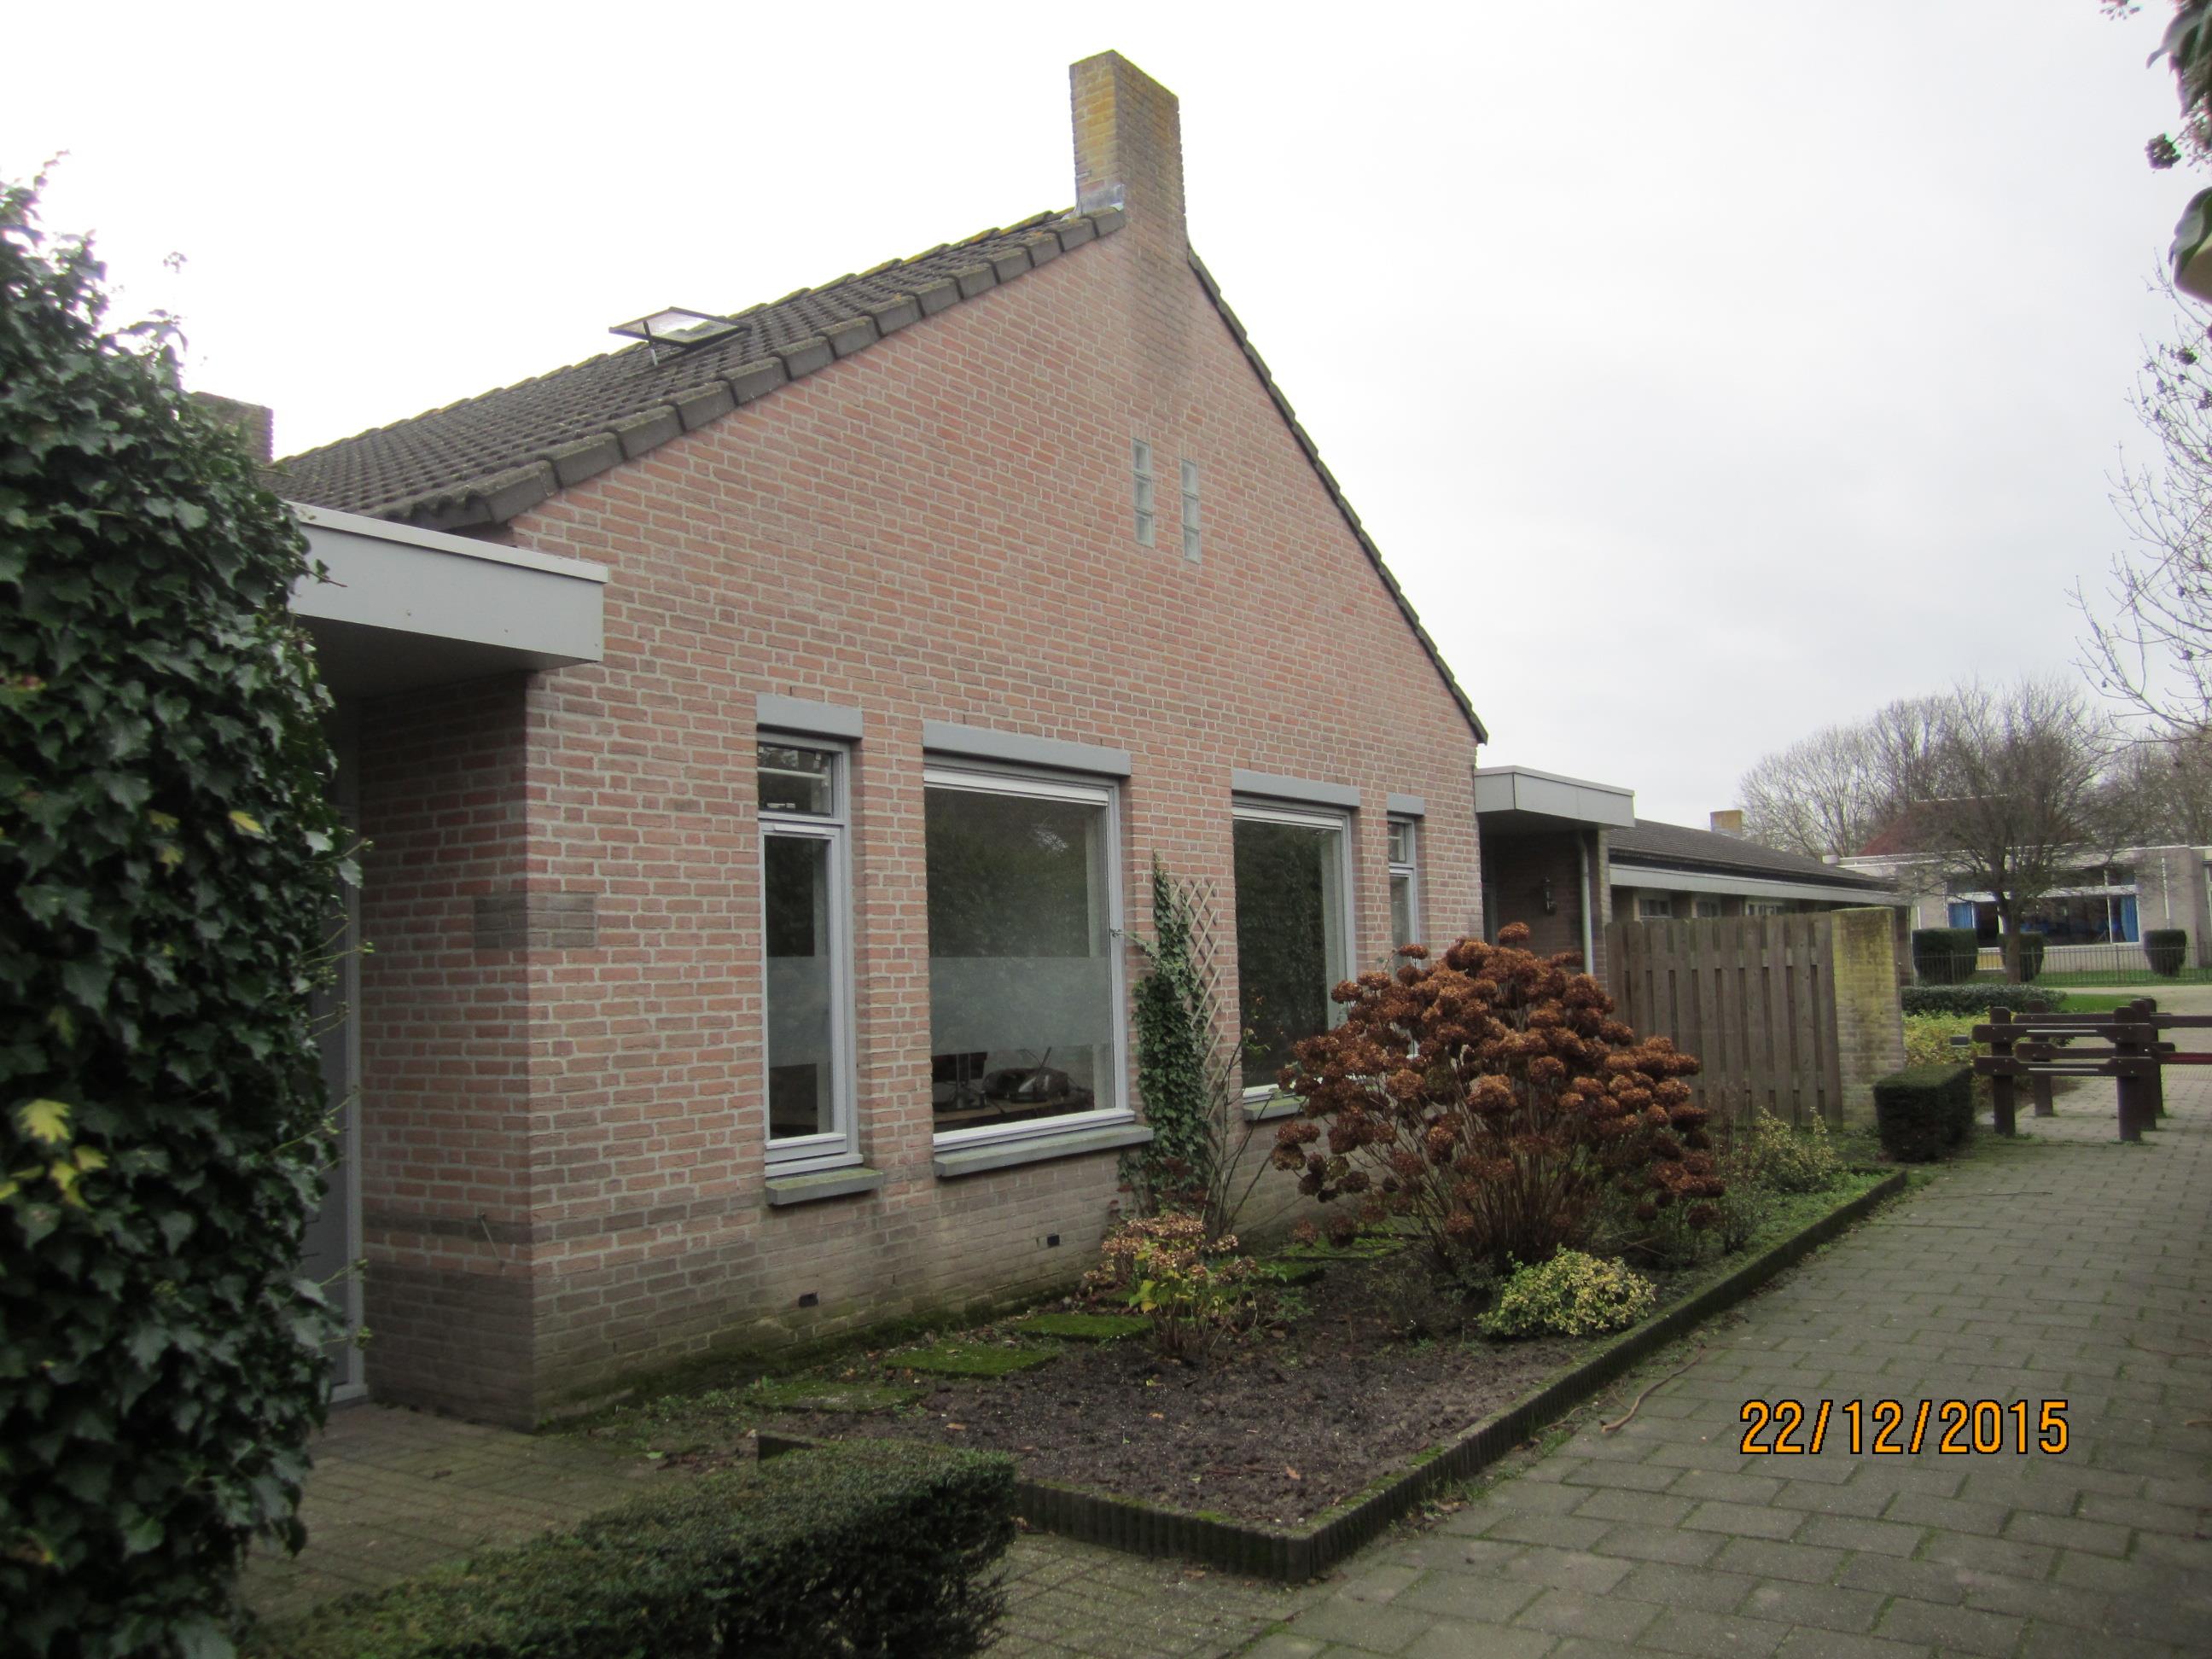 Kasteellaan 31, 5256 GV Heusden, Nederland